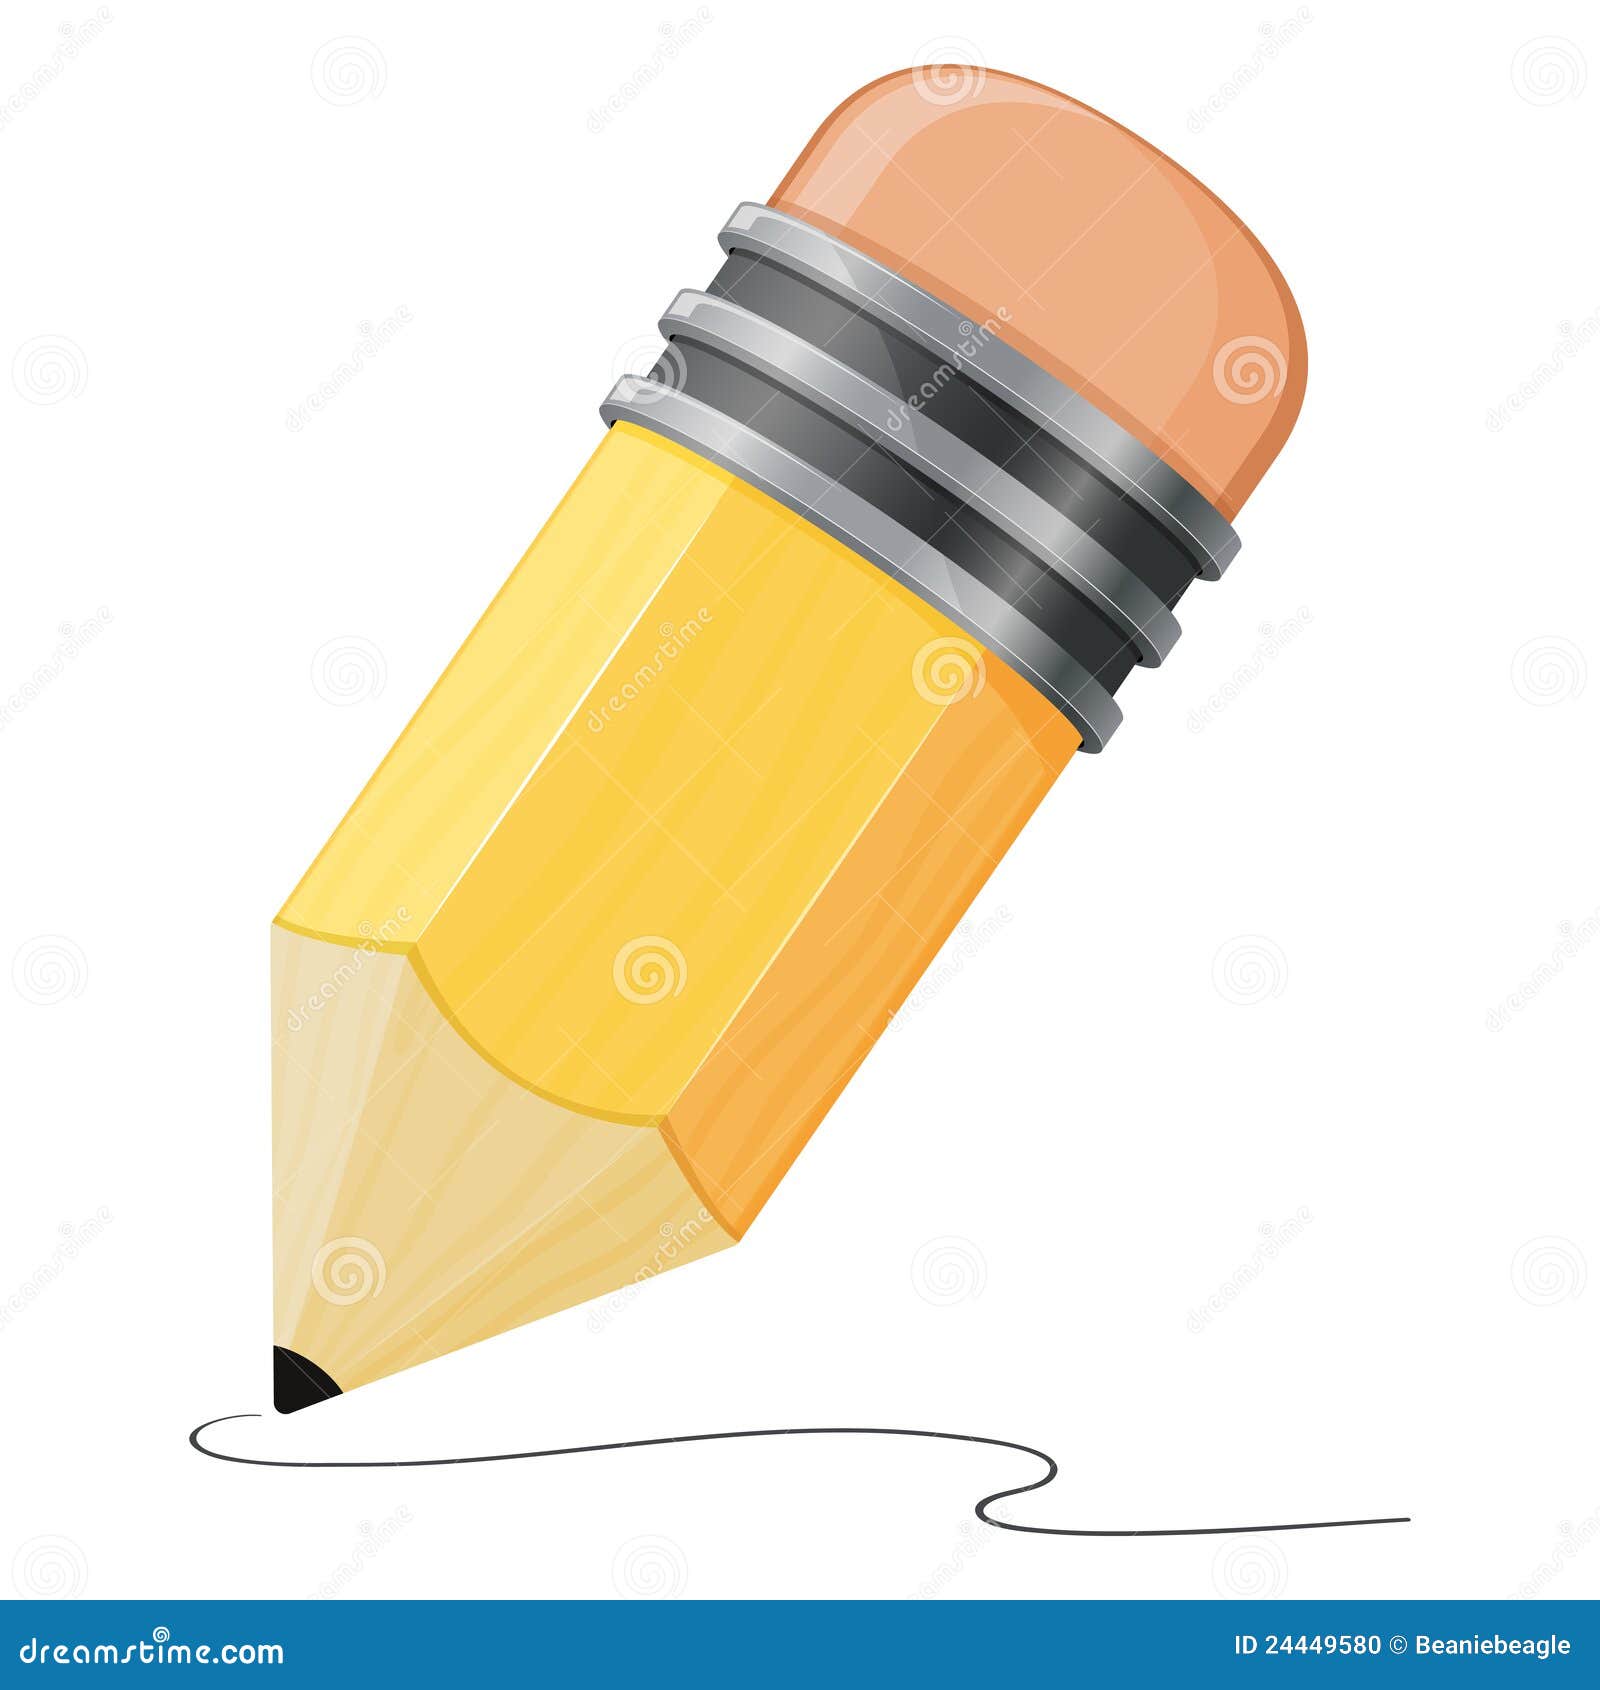 pencil icon drawing